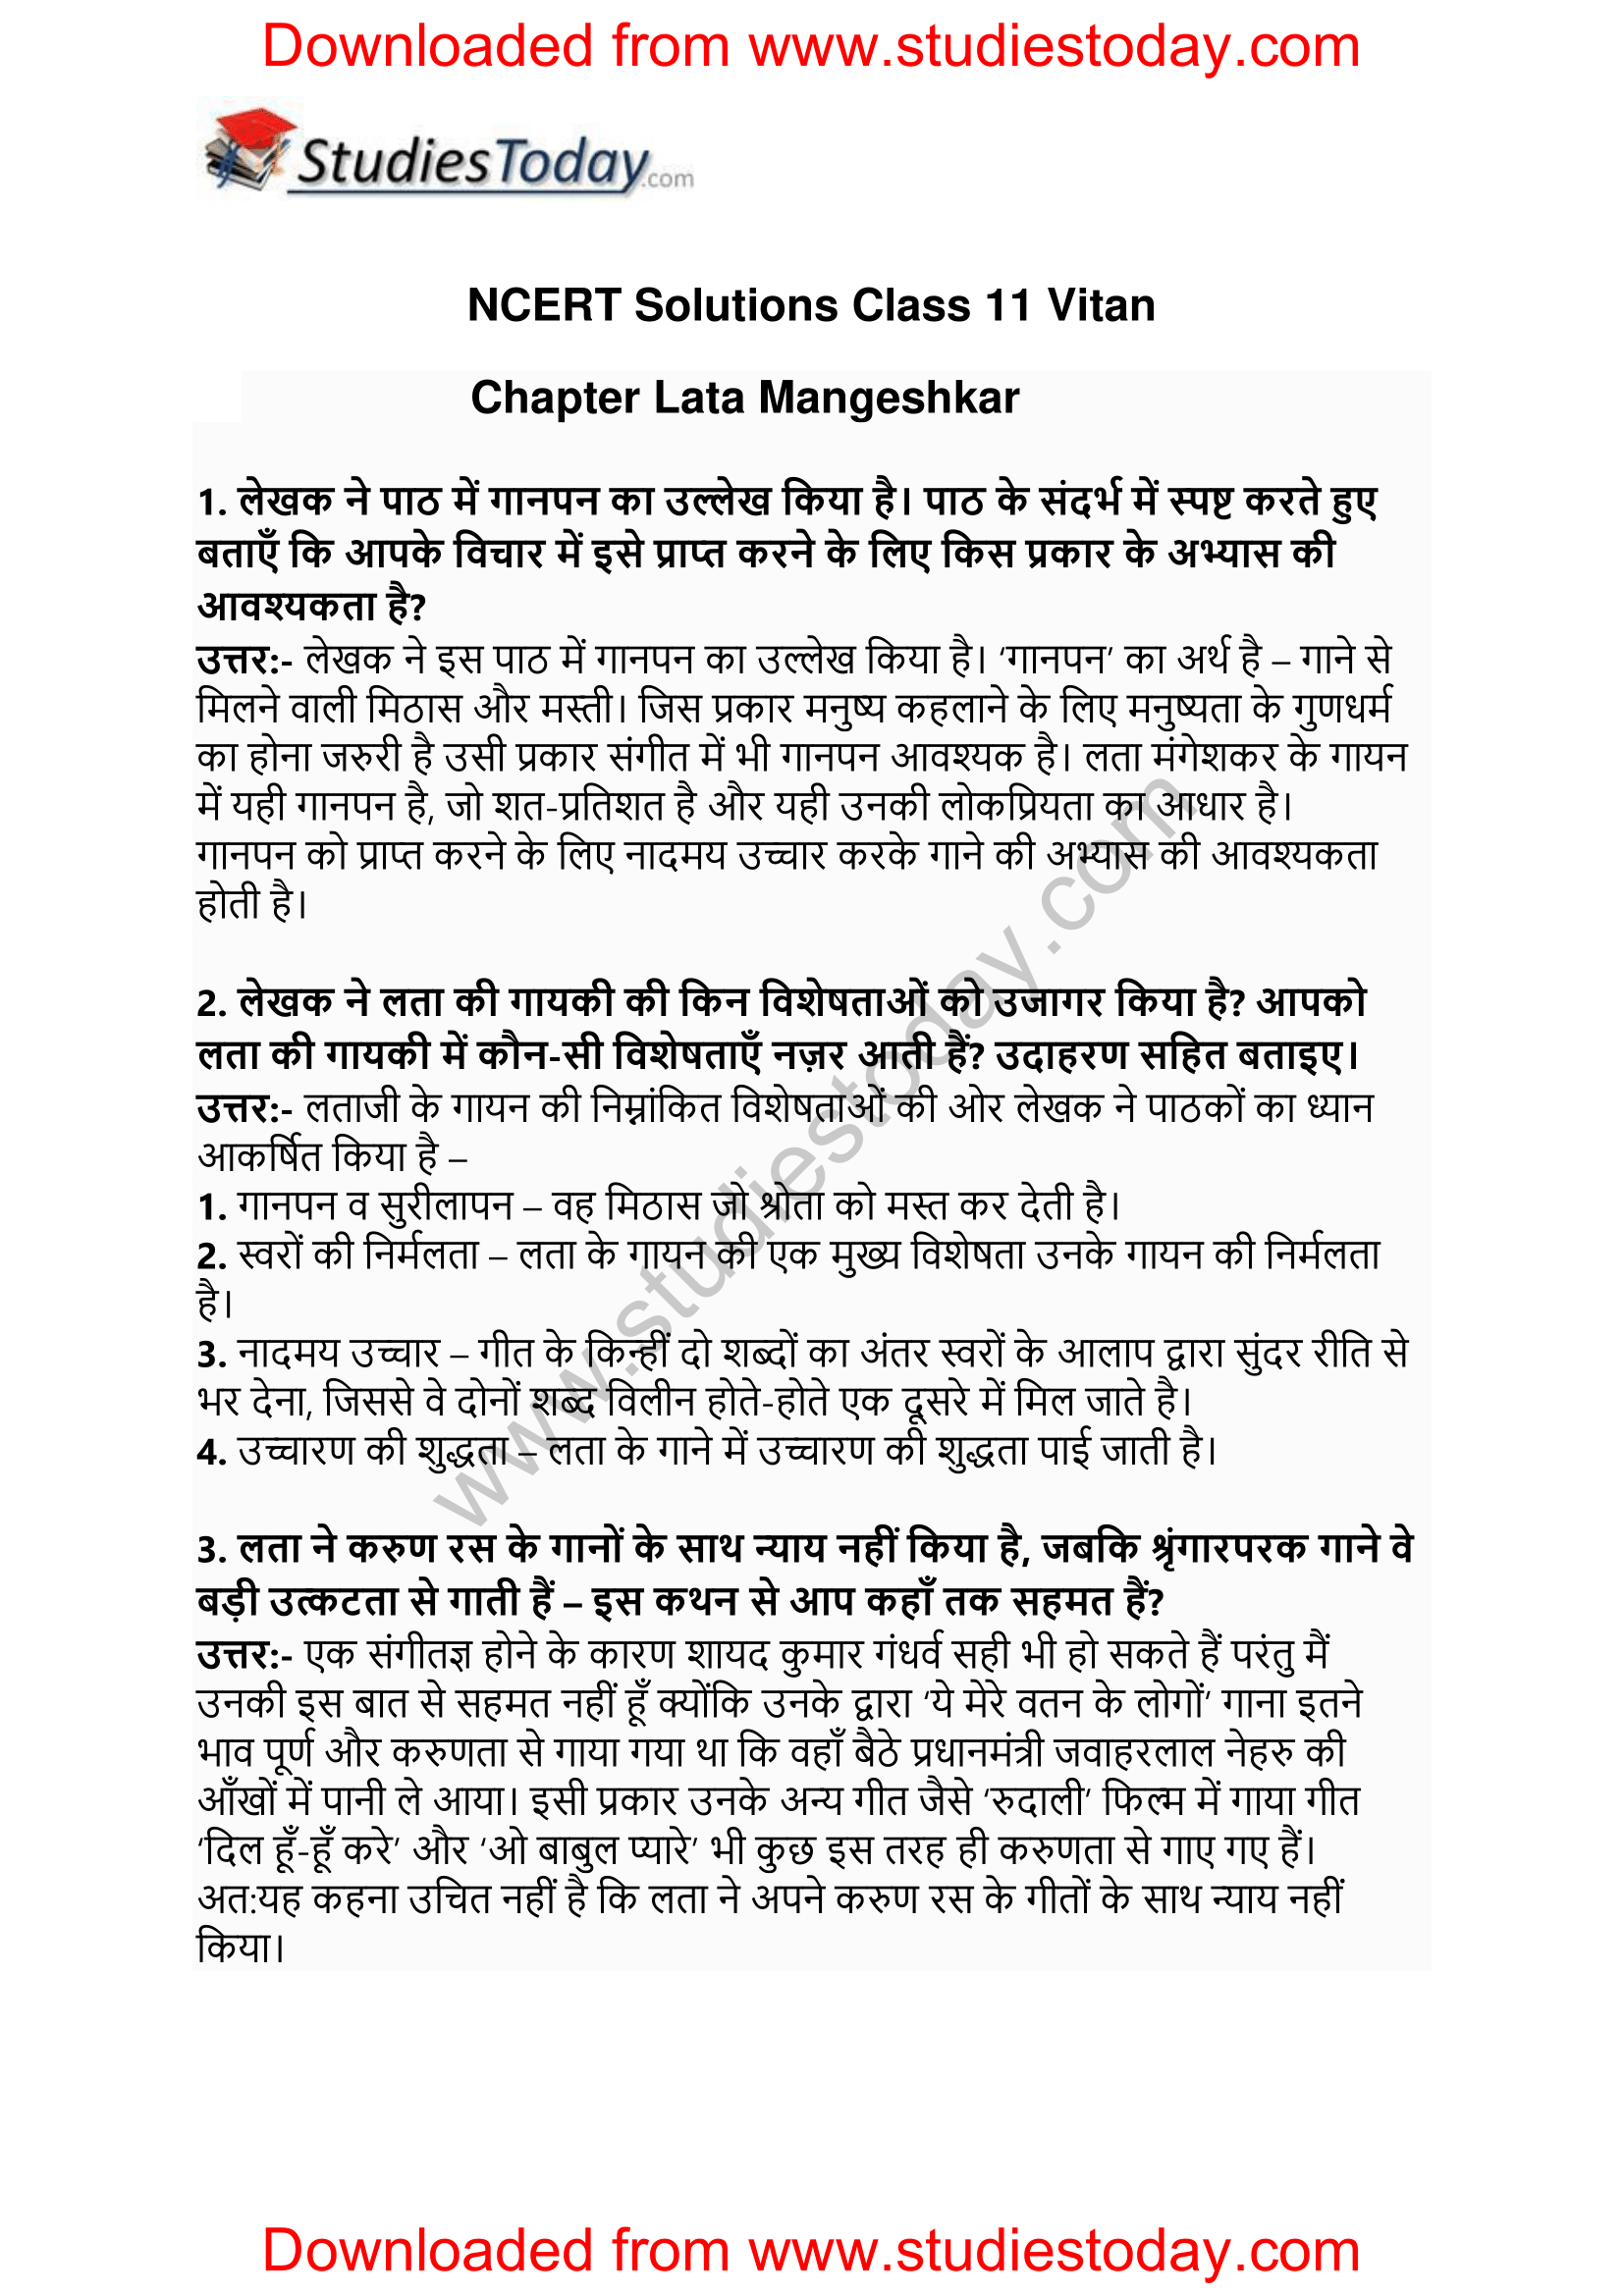 NCERT-Solutions-Class-11-Hindi-Vitan-Lata-Mangeshkar-1